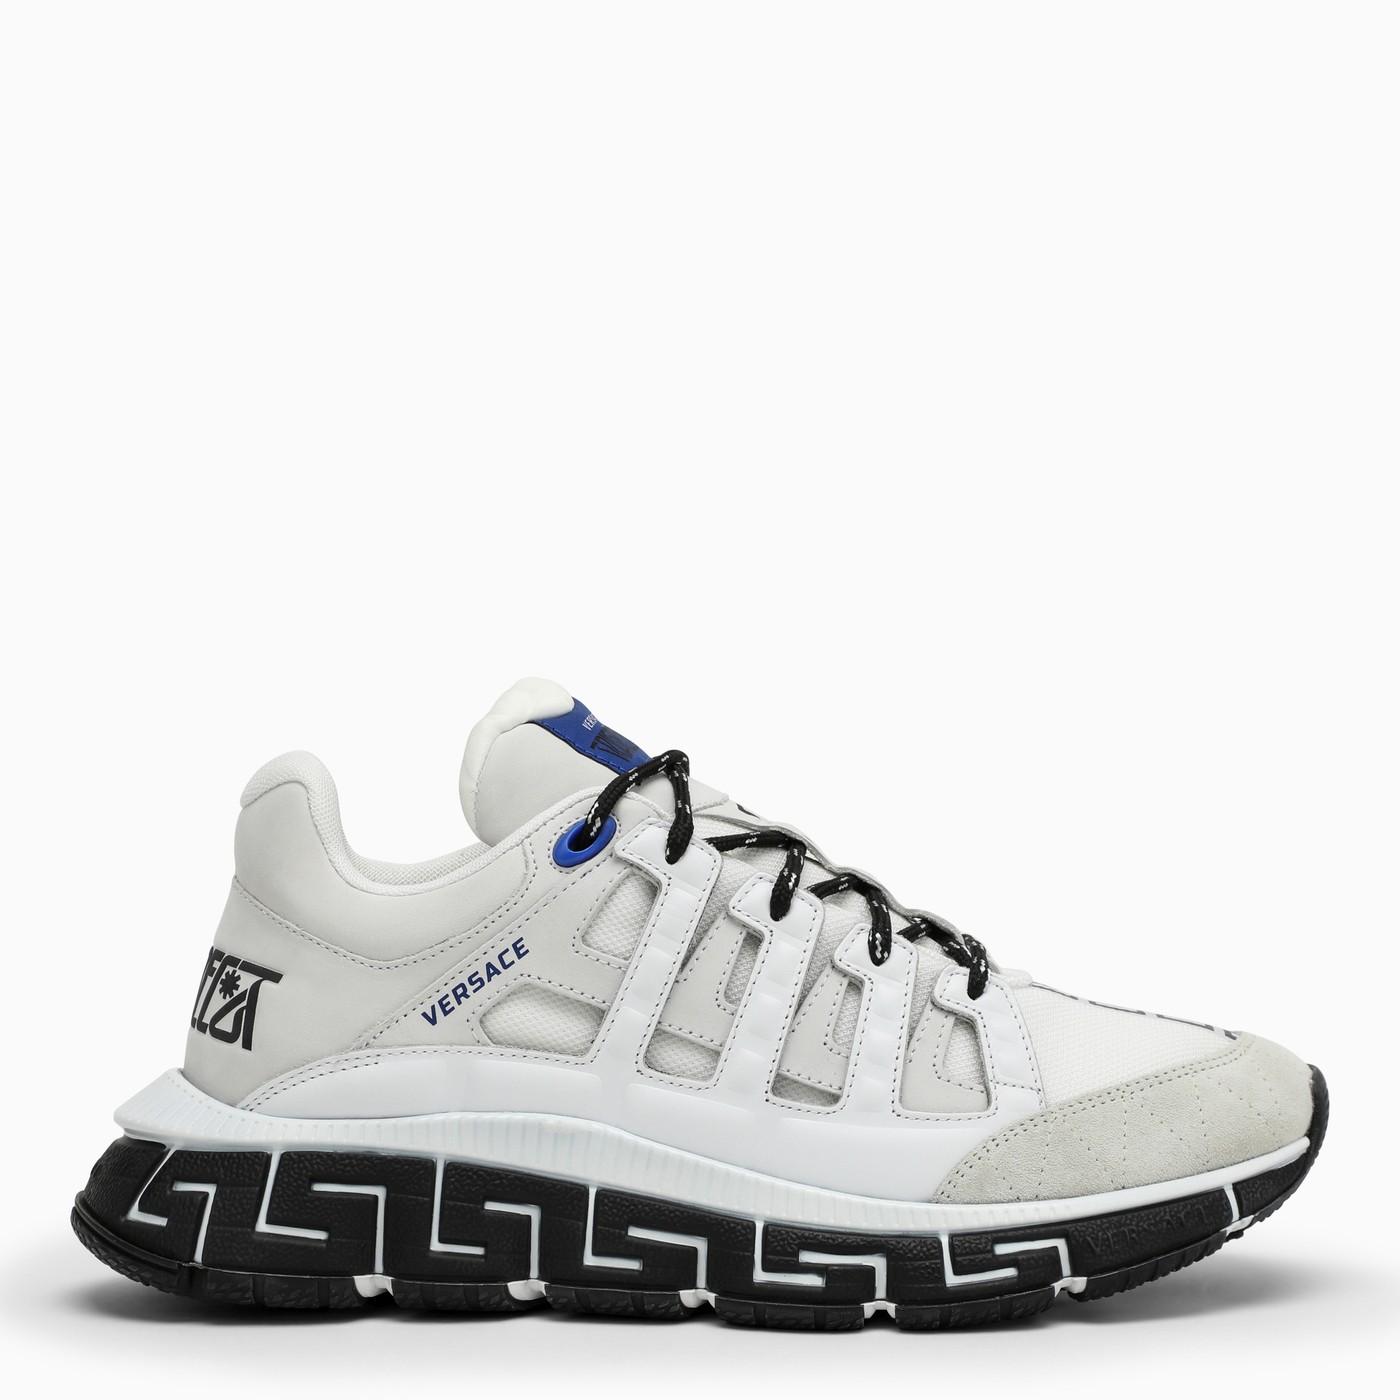 Versace Chain Reaction Sneakers, $895, farfetch.com